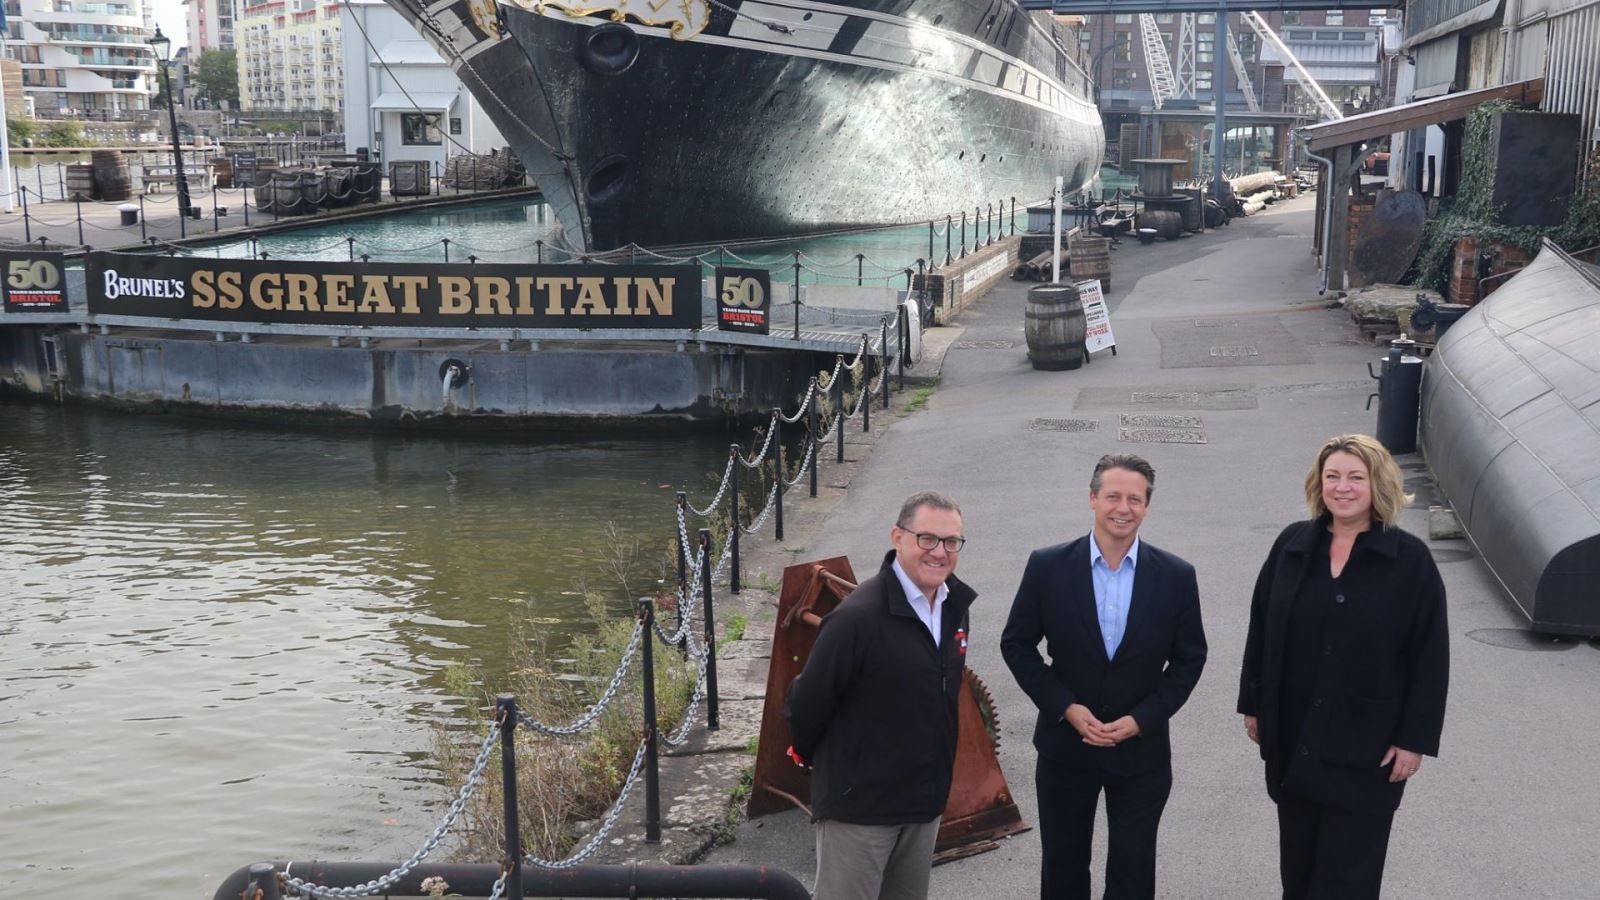 Tourism Minister Nigel Huddleston at Brunel's SS Great Britain in Bristol